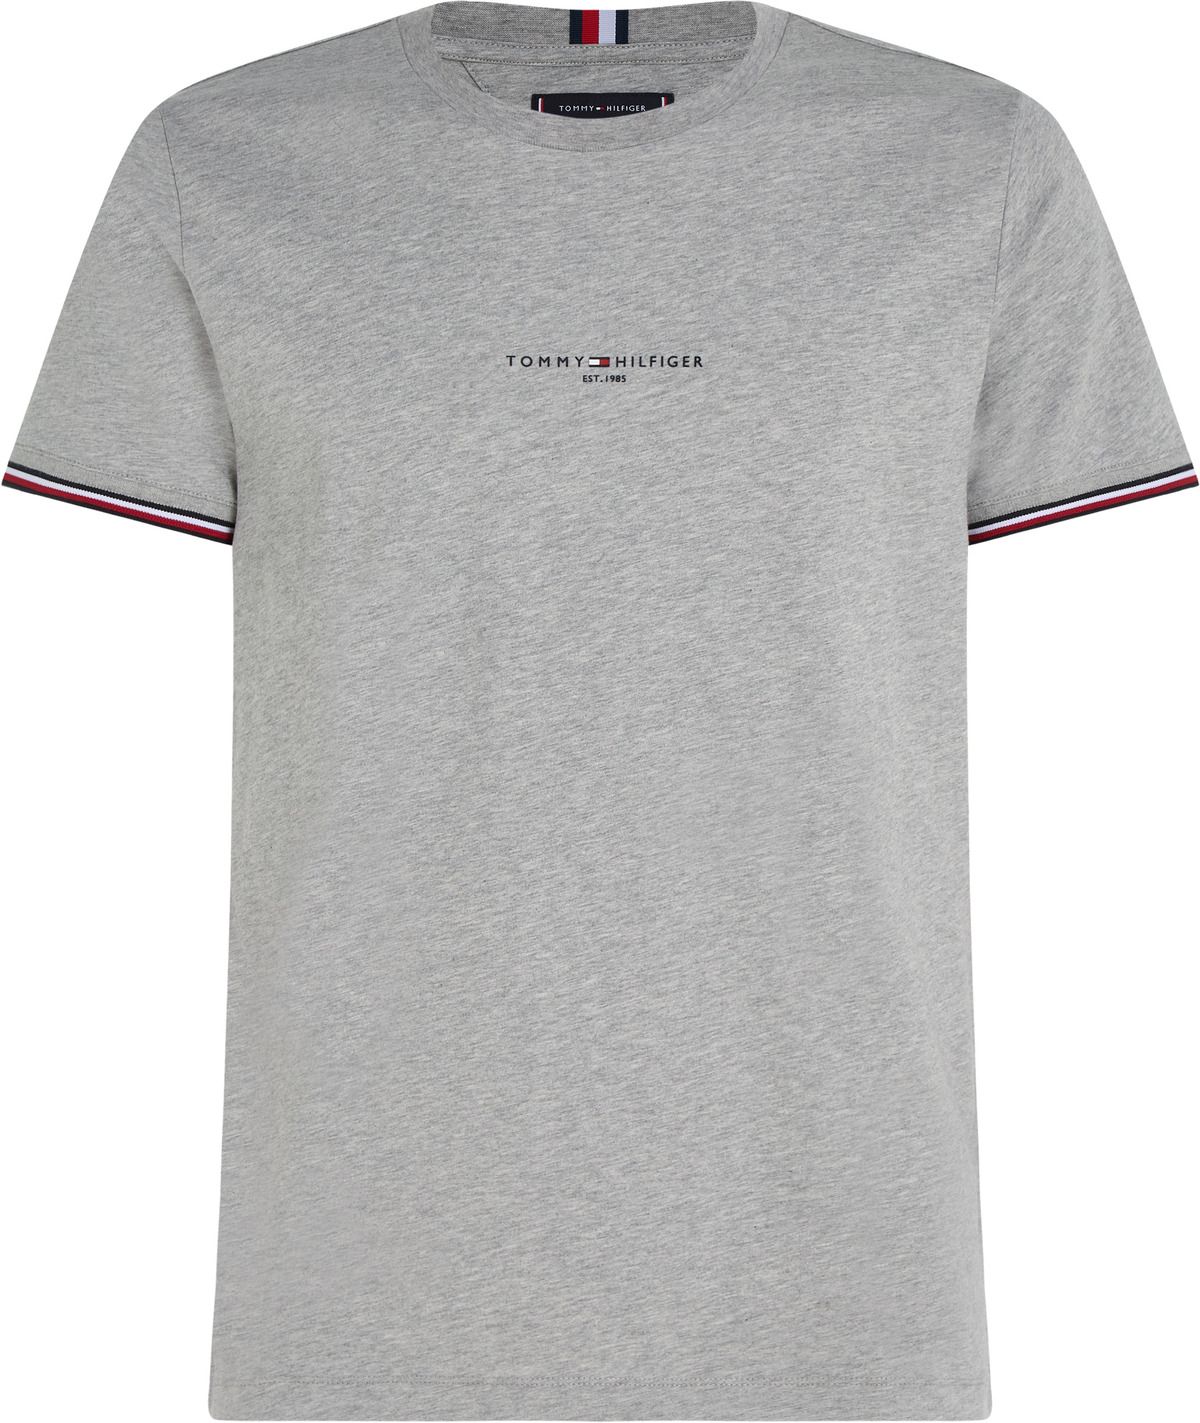 Tommy Hilfiger Erkek Marka Logolu Pamuklu Günlük Kullanıma Uygun Gri T-shirt Mw0mw32584-p01